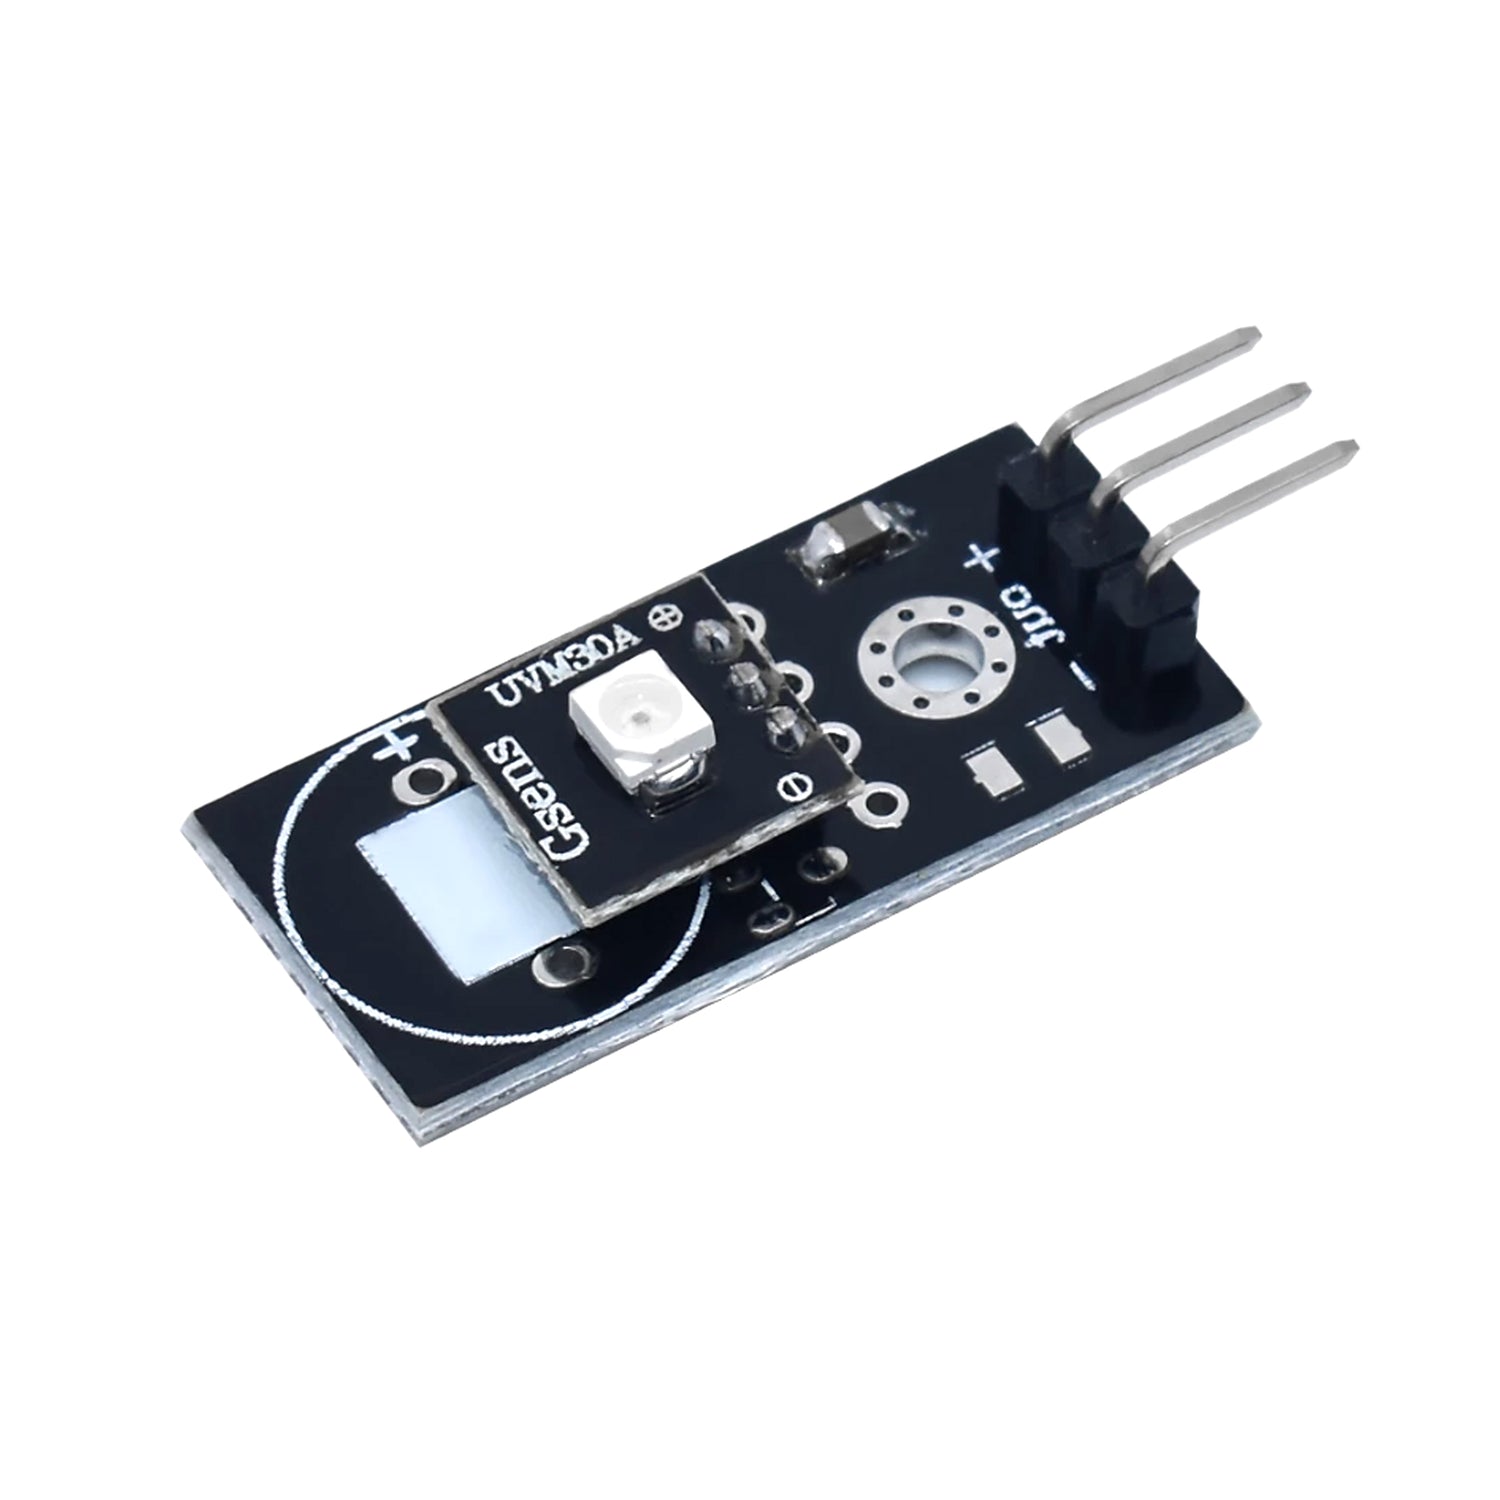 UVM-30A UV Sensor Detector Module for Arduino Development Board Ultraviolet Ray Detection Sensor Module - RC009 - REES52